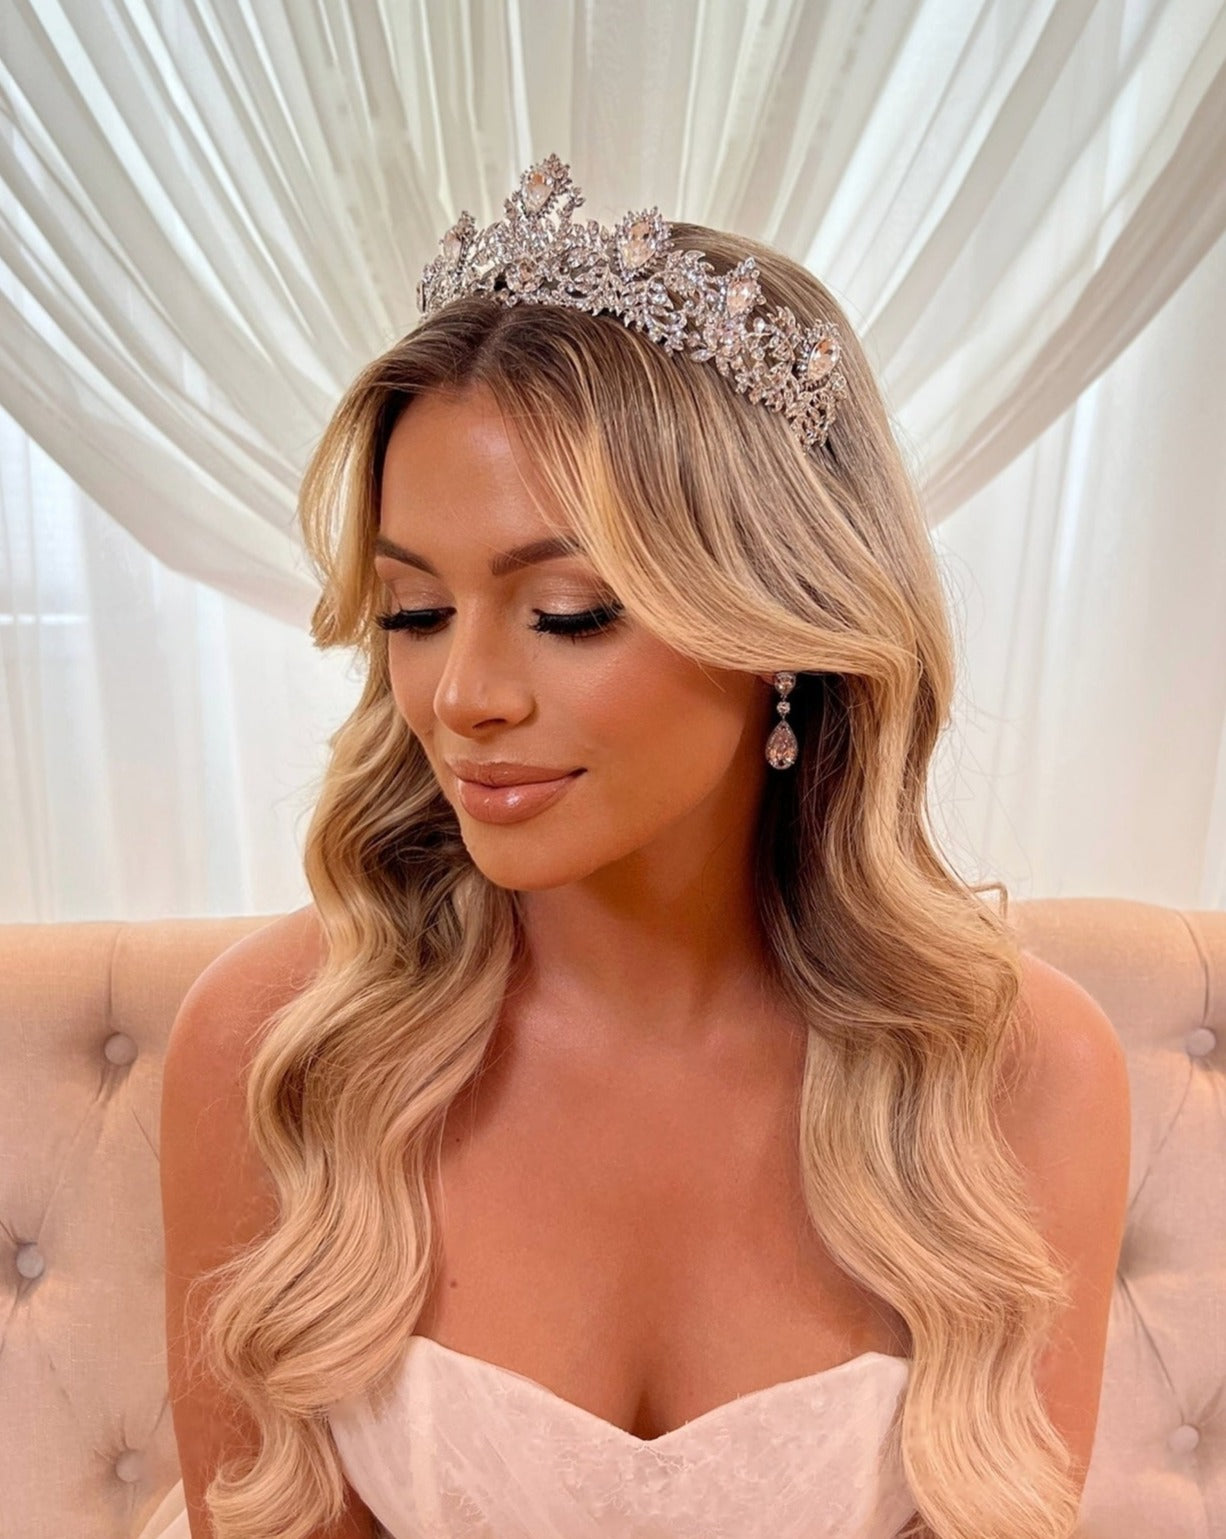 female model wearing bridal tiara with silver leaf details and large crystal peaks